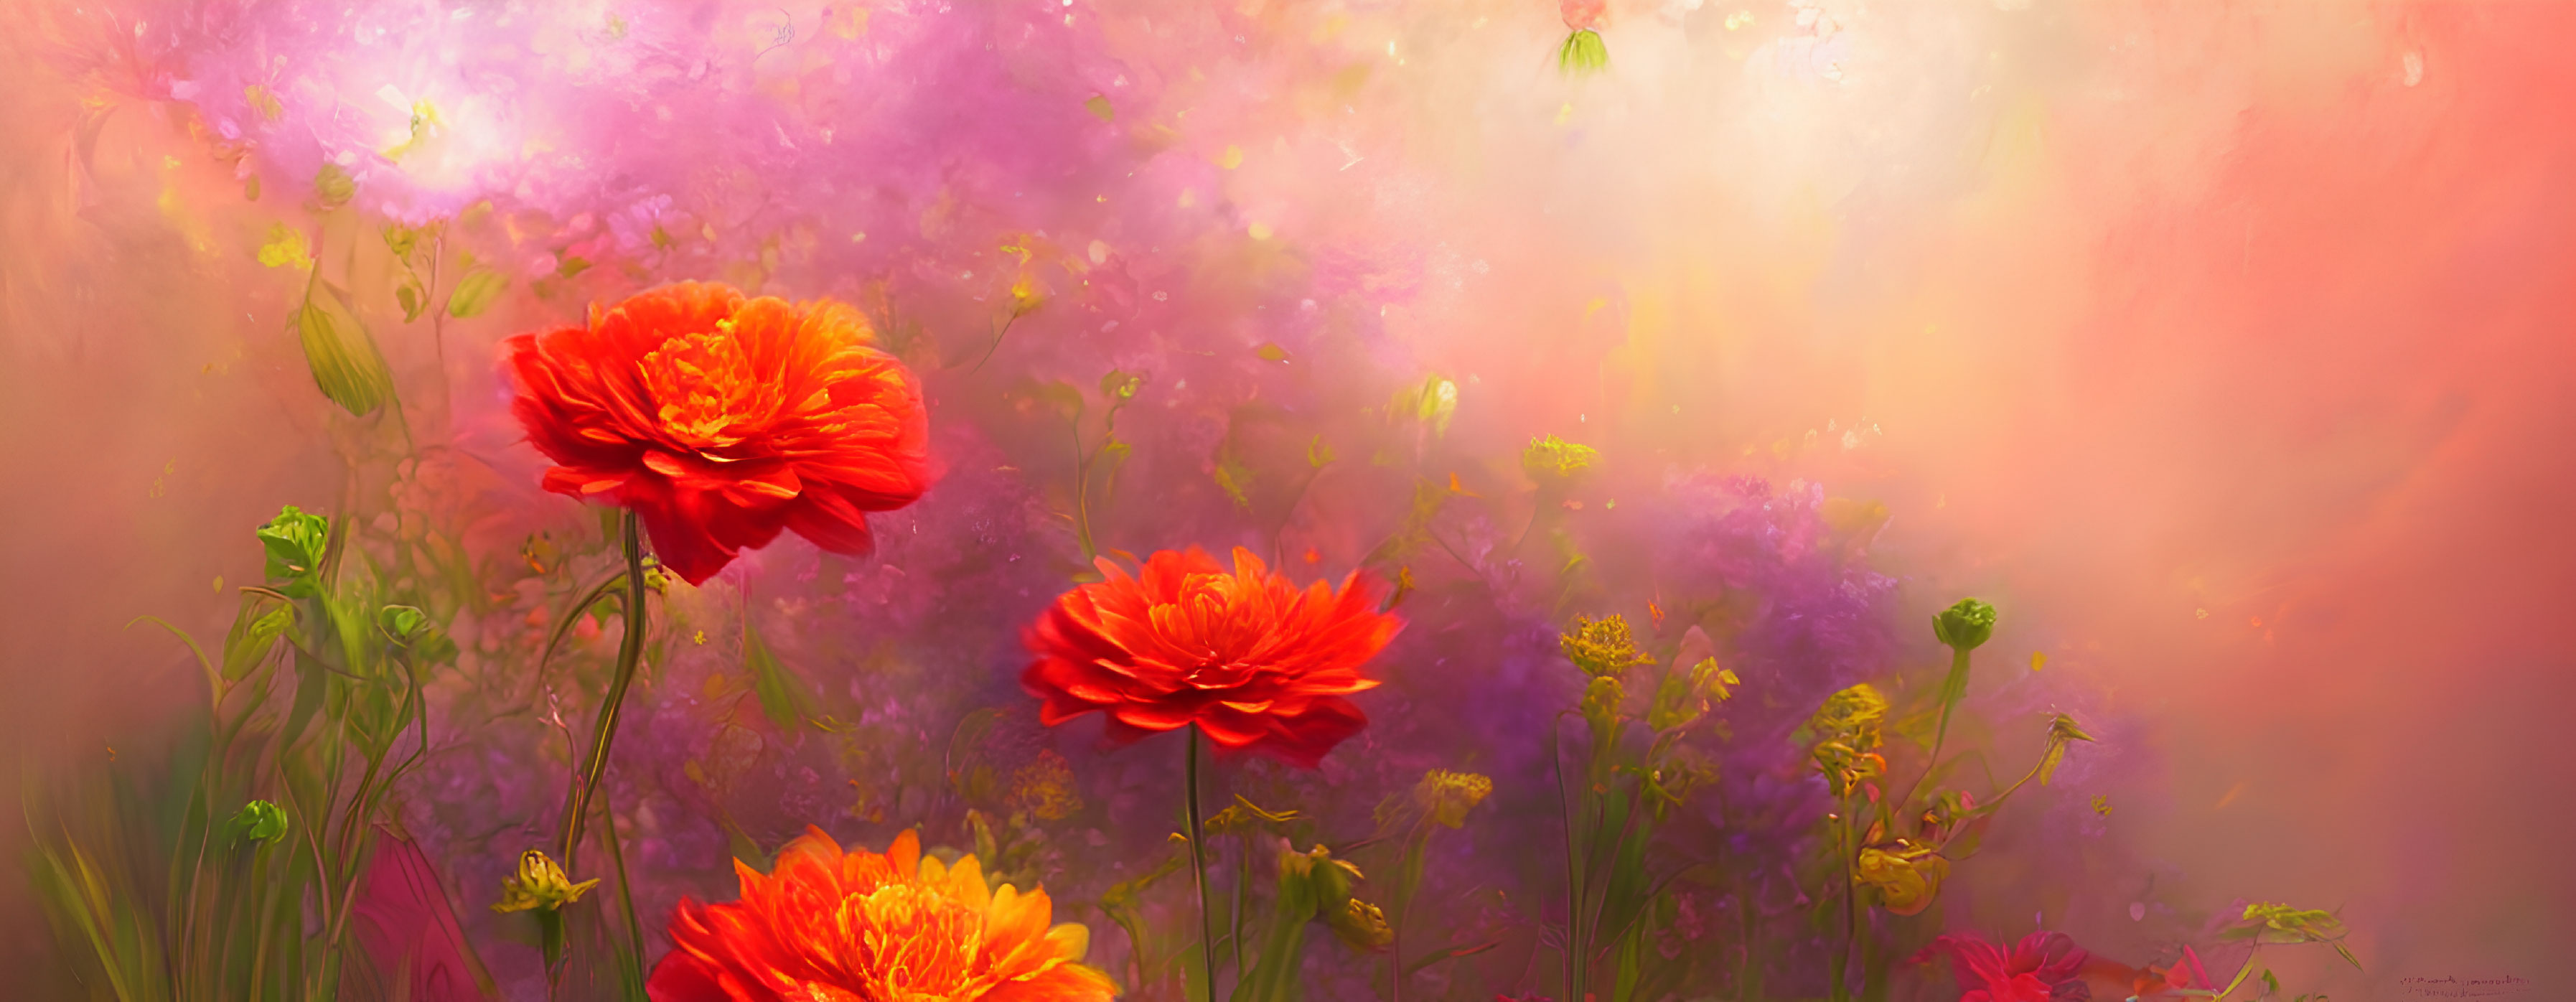 Vibrant orange-red flowers on soft, radiant purple-pink background